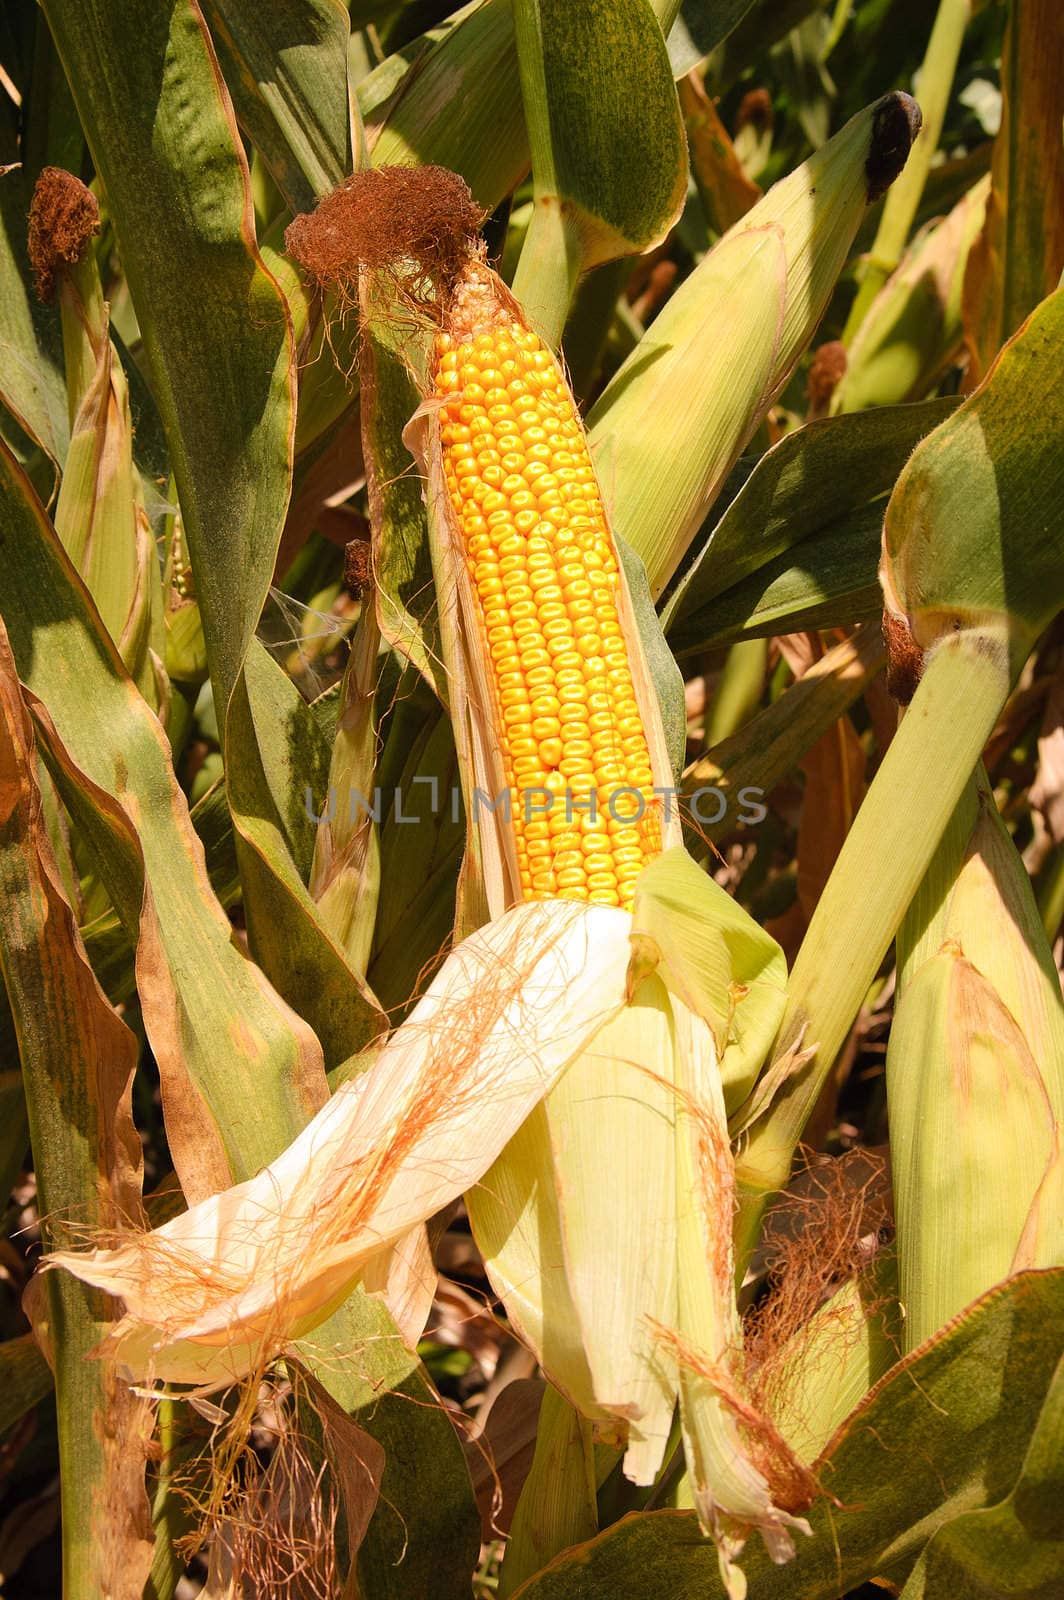 corn on the cob by jeffbanke